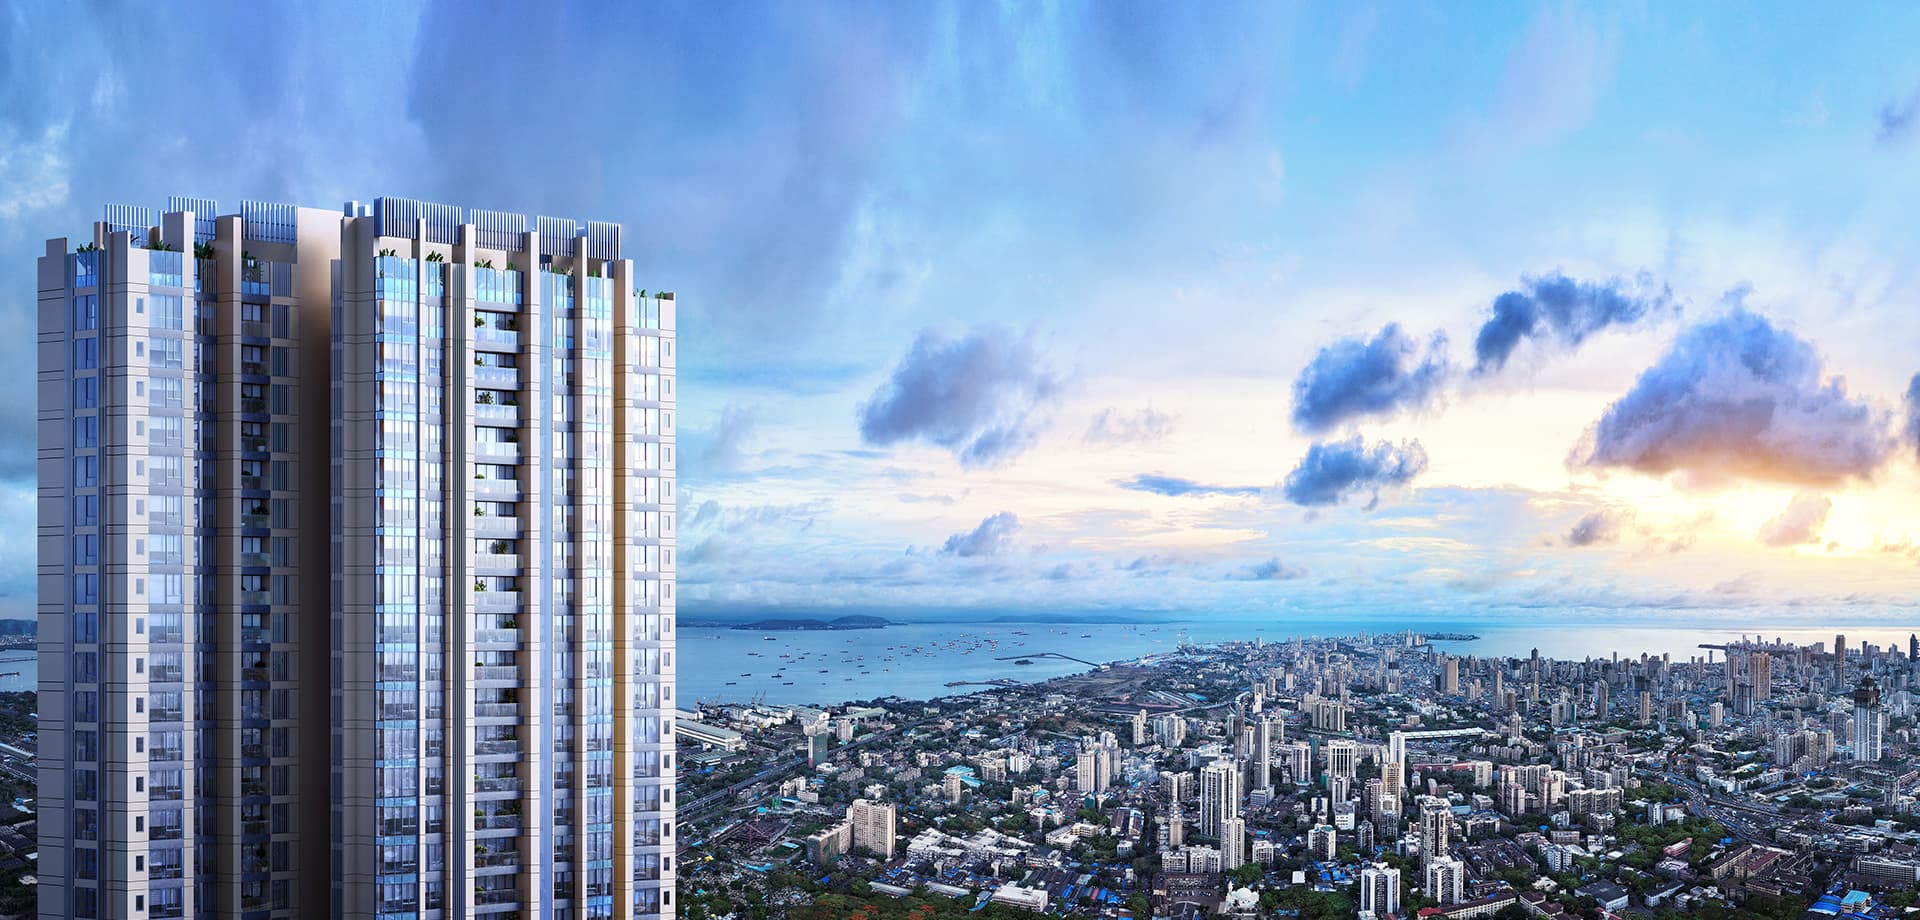 Stunning view from Piramal Aranya's luxury apartments, capturing the nearby area in Mumbai.